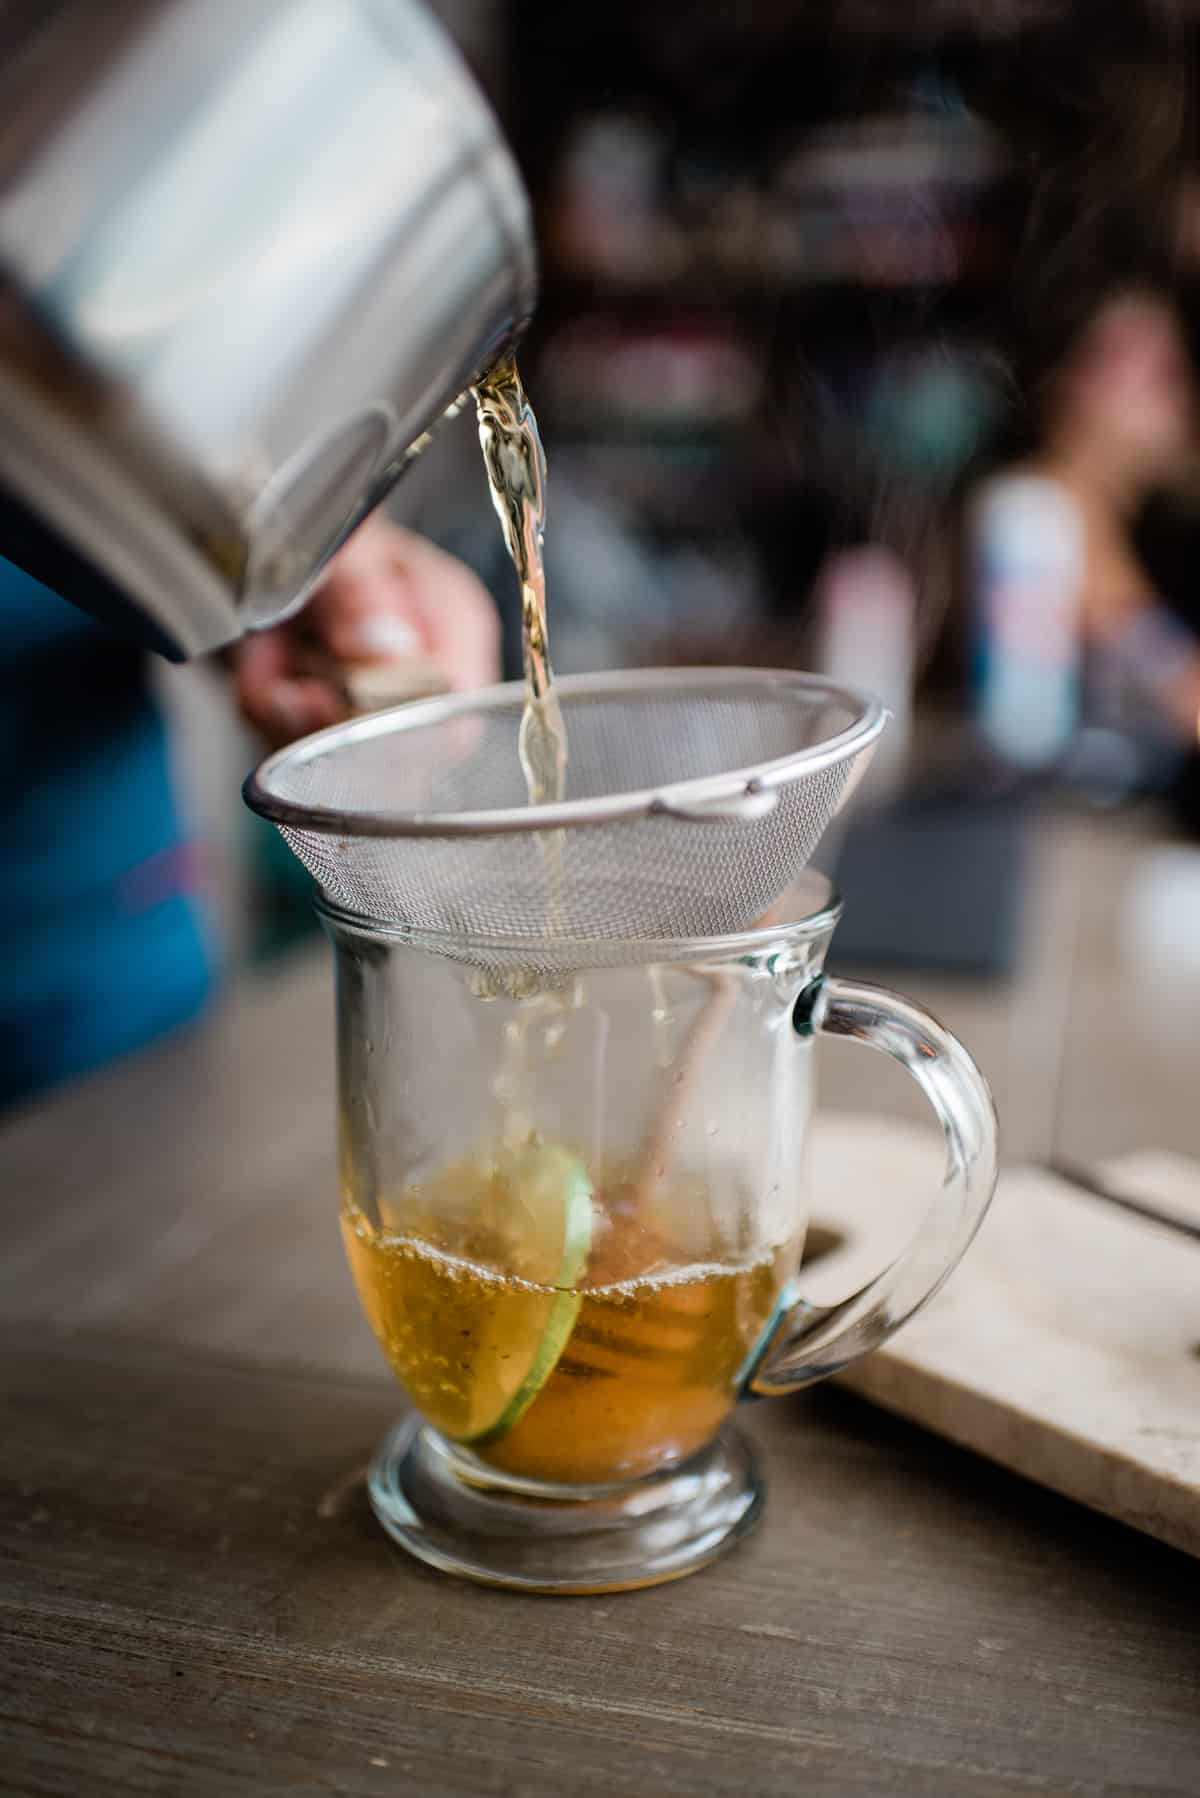 showing how to strain oregano tea from a saucepan through a mesh strainer into a mug.